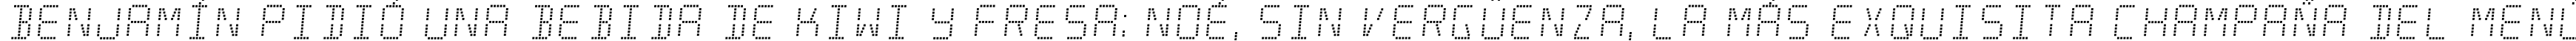 Пример написания шрифтом Minisystem текста на испанском